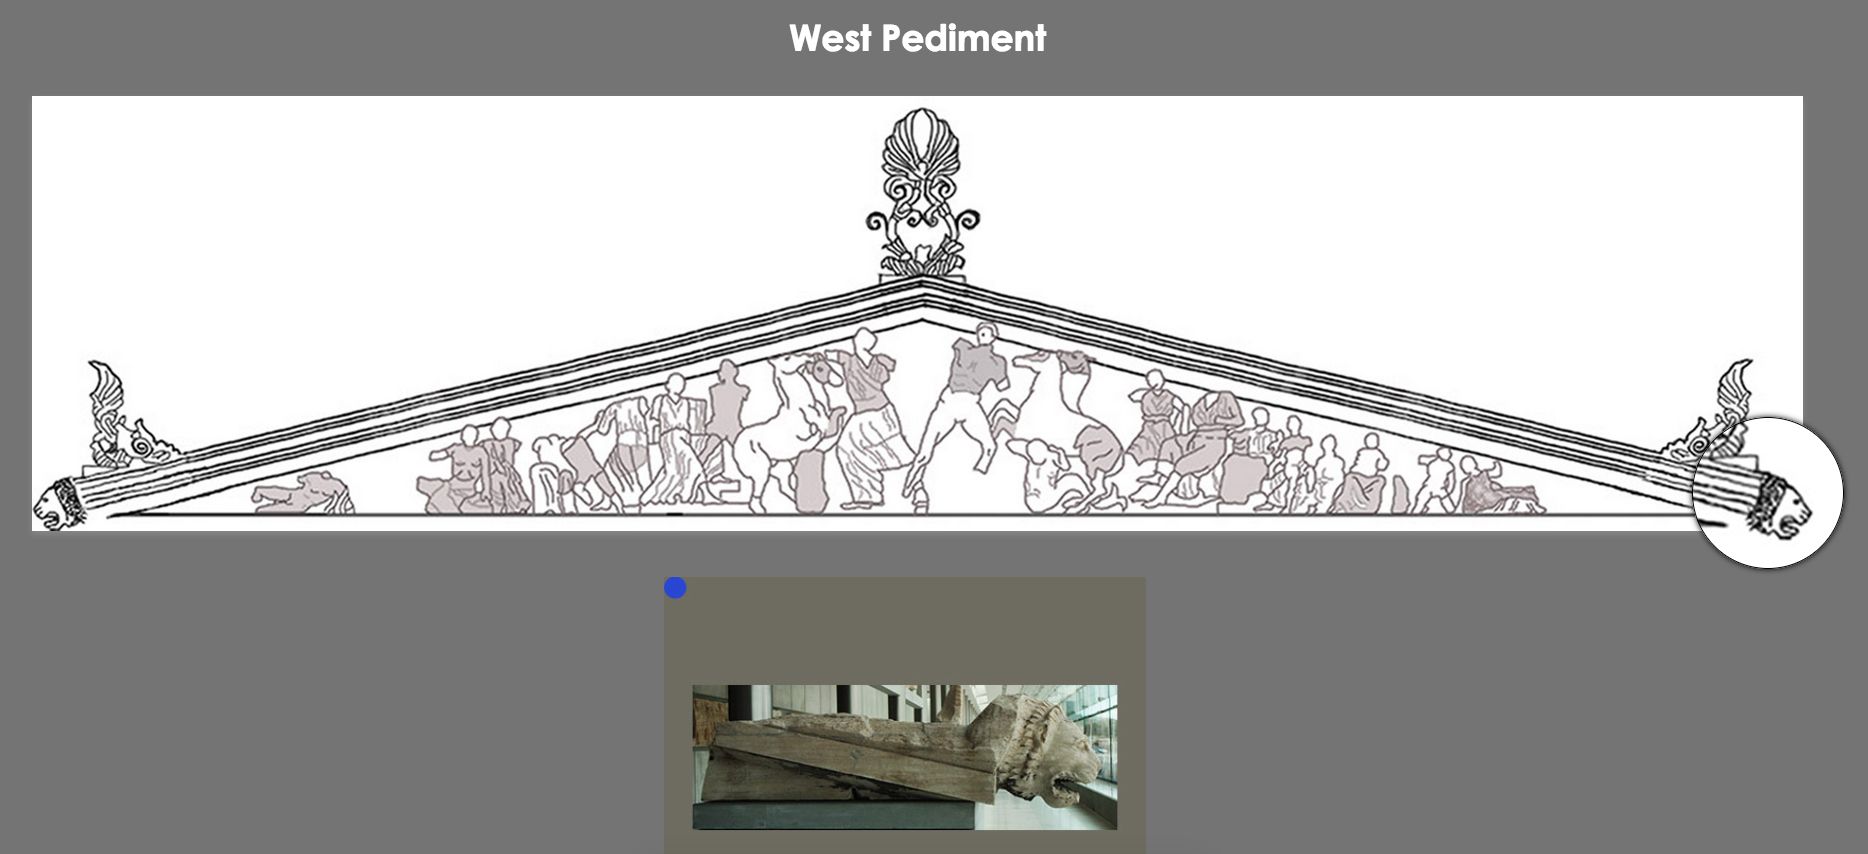 Web environment for the west pediment sculptures of the Parthenon monument by Maria Dimitrakarakou